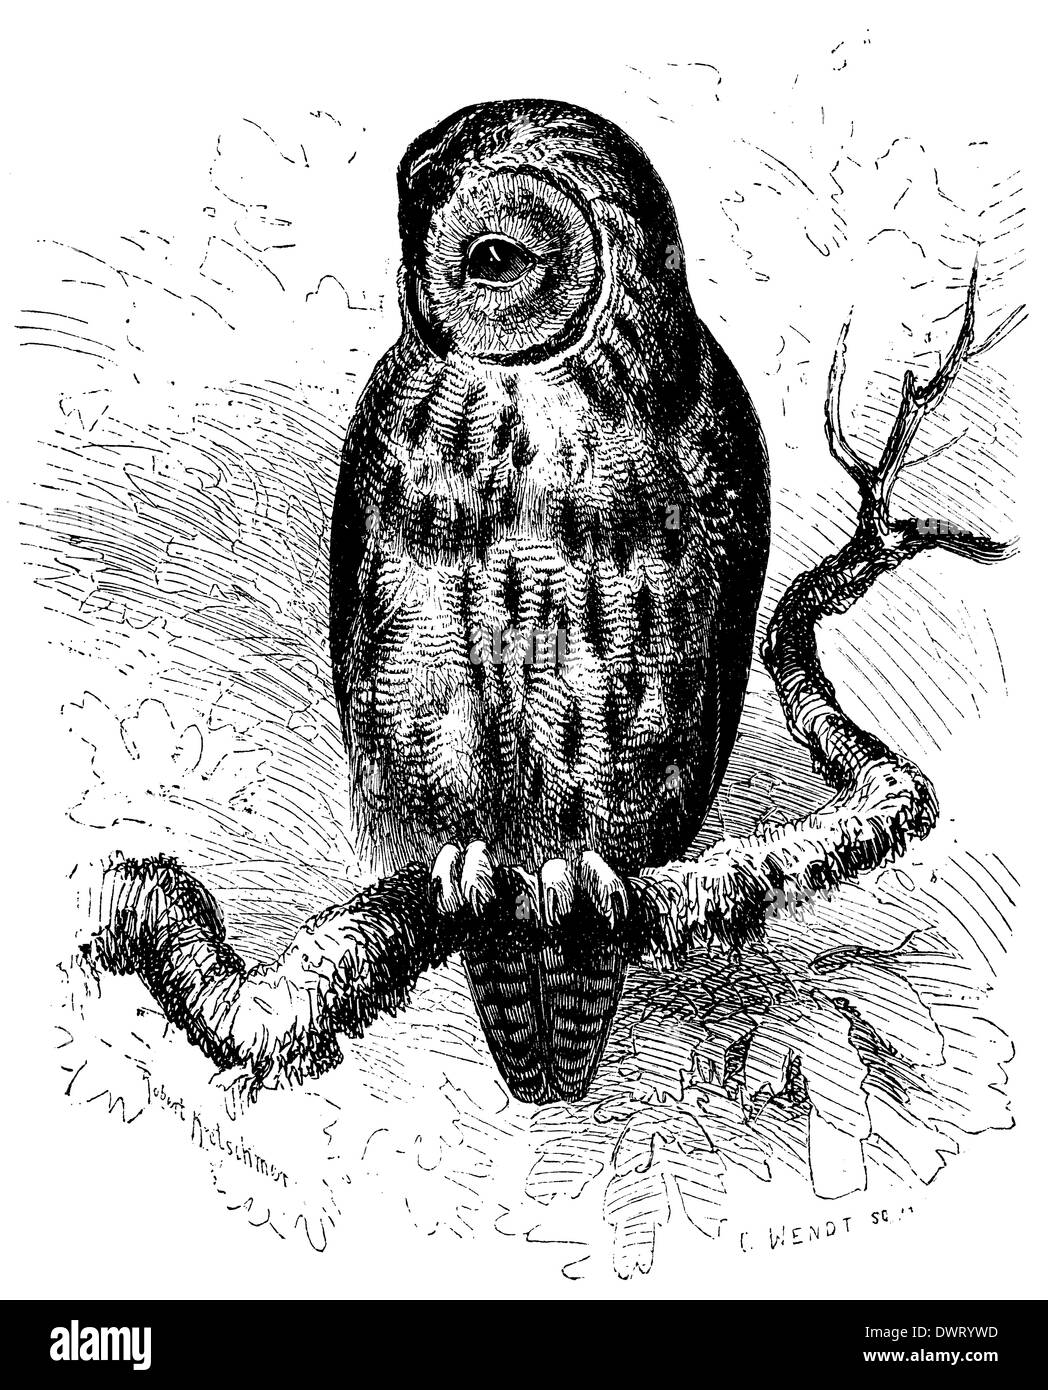 Brown owl Stock Photo